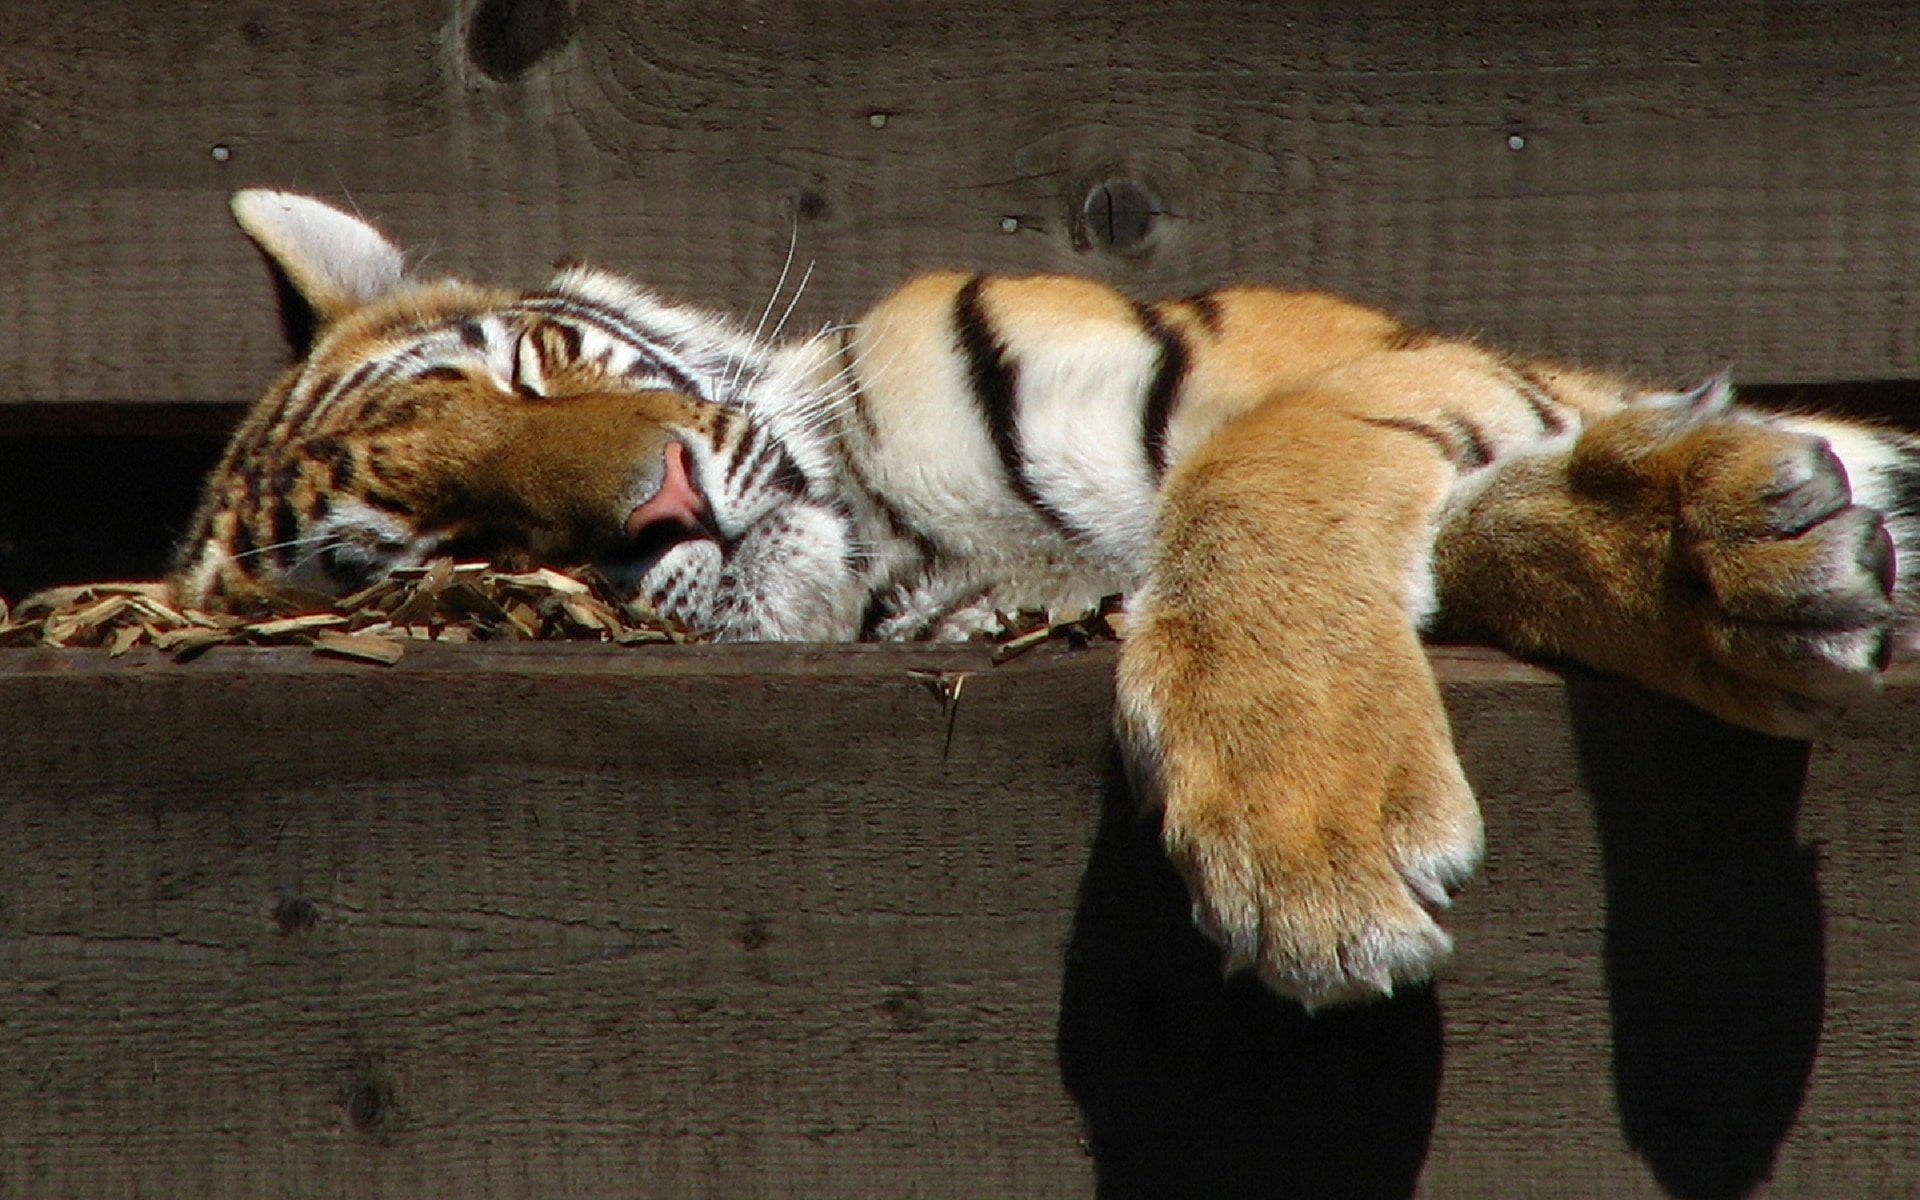 Zoo, Big Cat, Sleeping, Tiger, Predator, animal themes, one animal